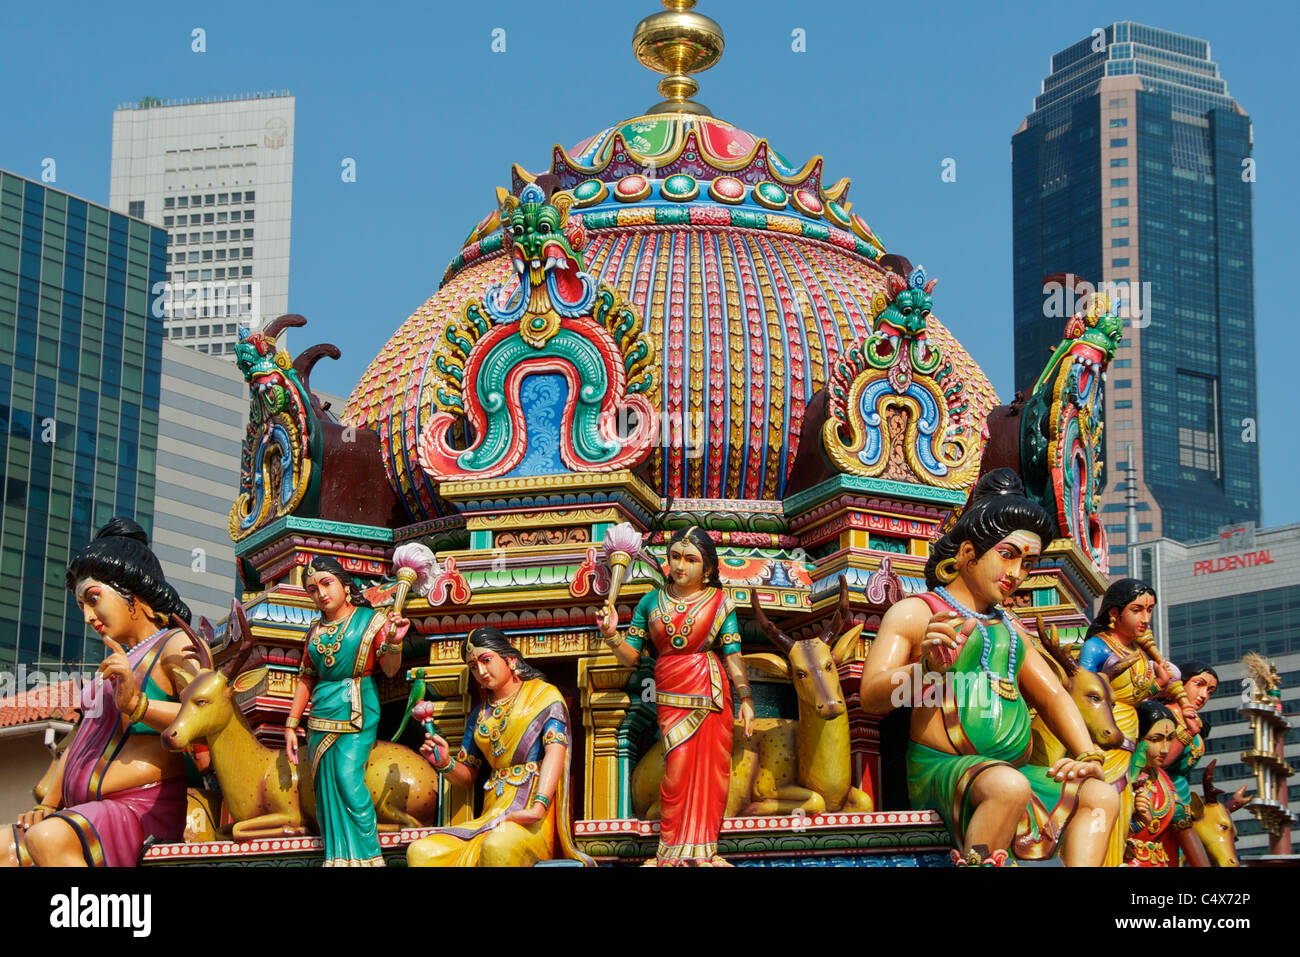 Colourful sculptures on the Sri Srinivasa Perumal Temple and financial district Singapore Stock Photo